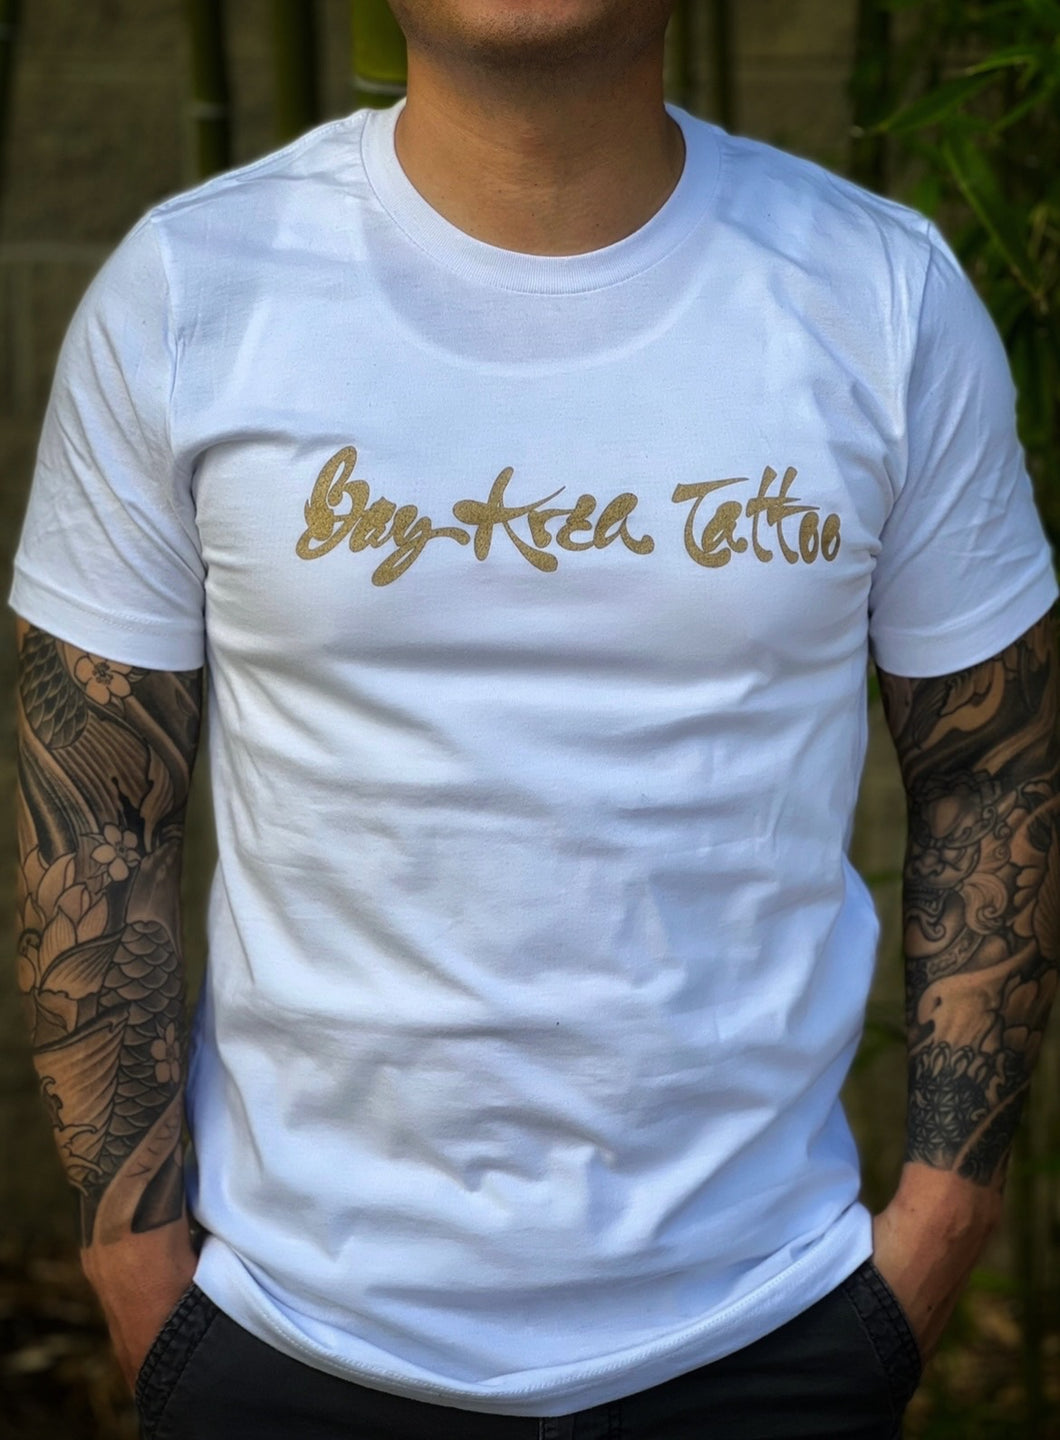 Gold Bay Area Tattoo White T-Shirt